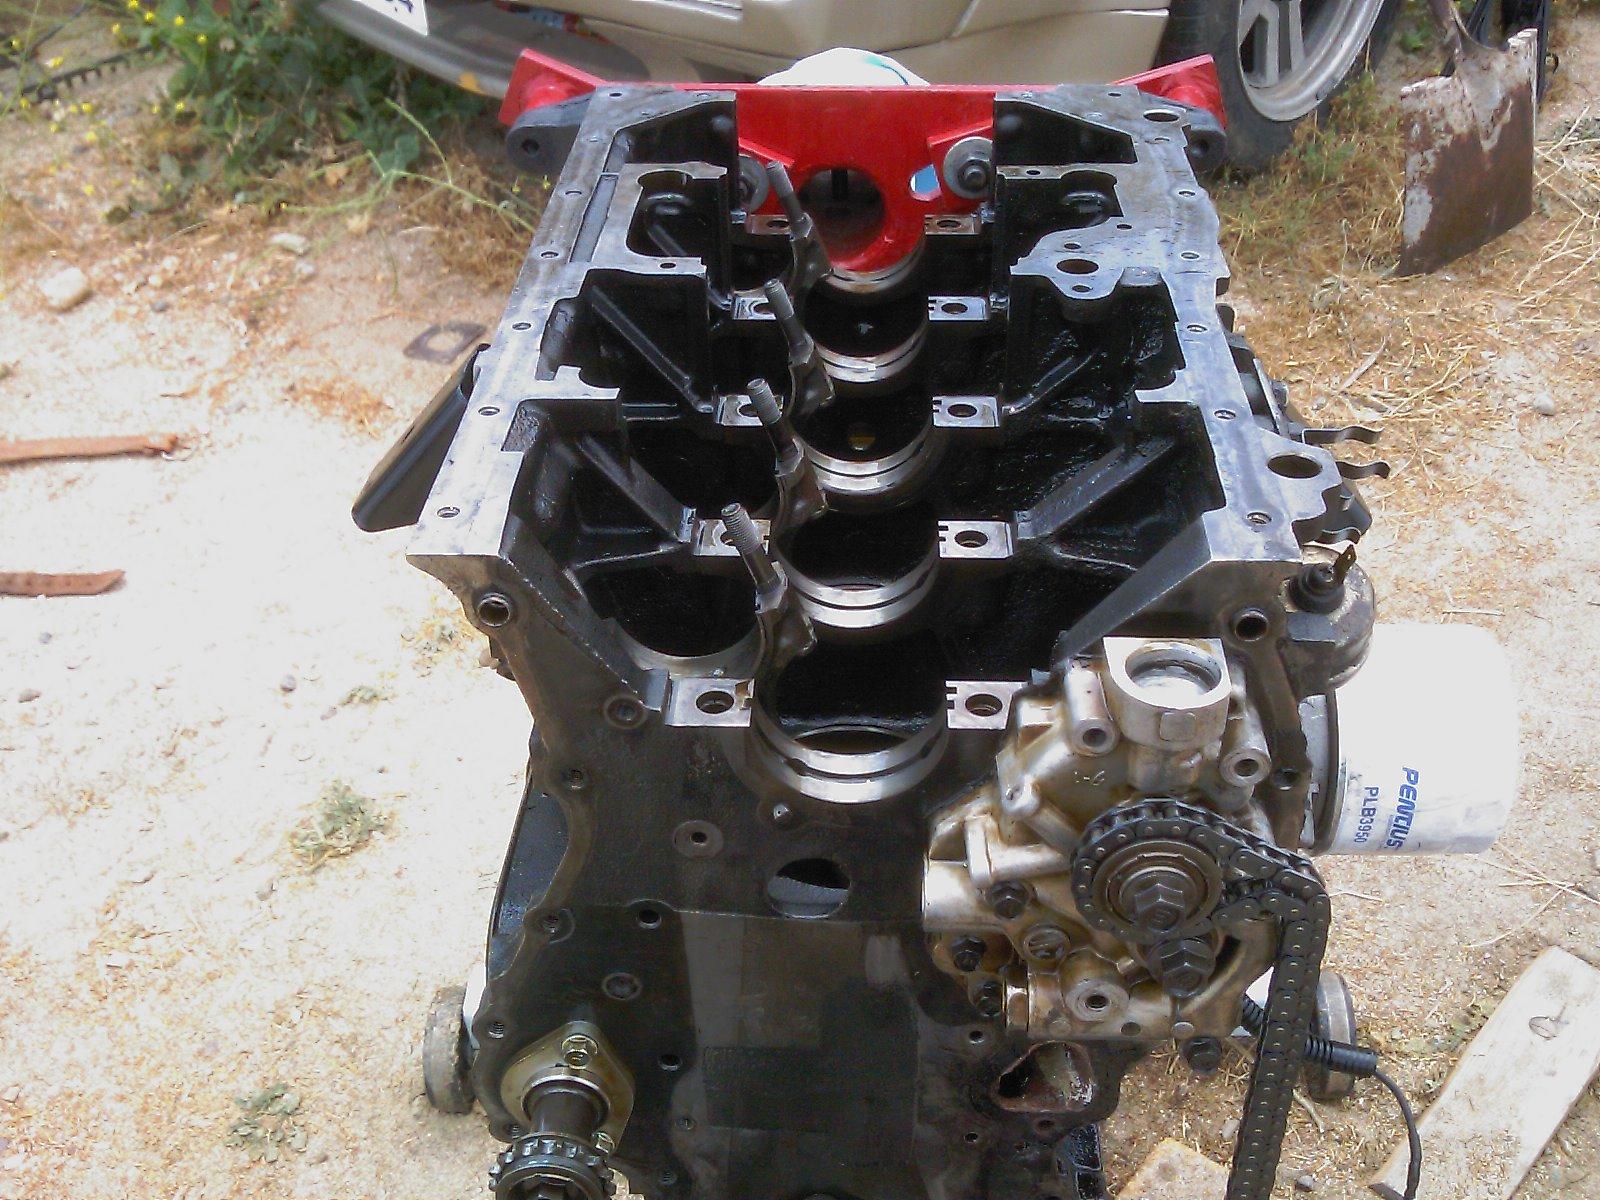 engine disassembled